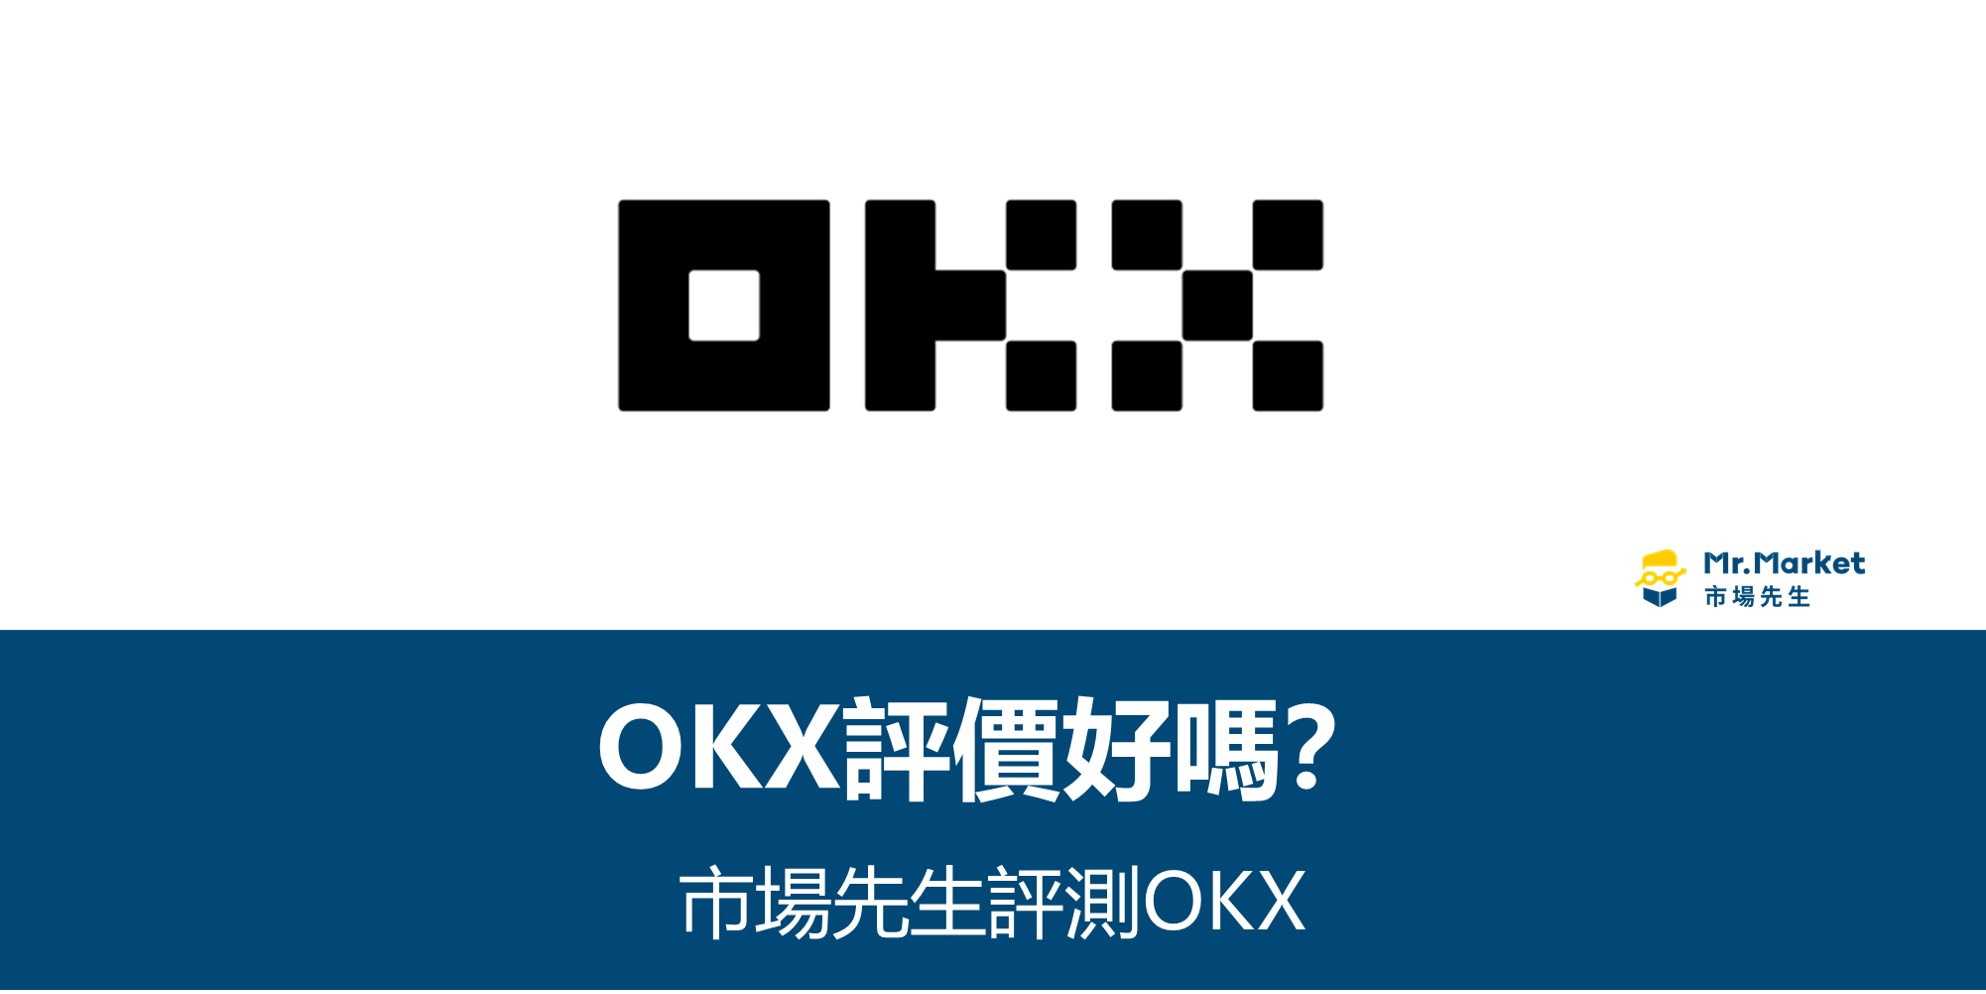 OKX評價好嗎-市場先生評測OKX